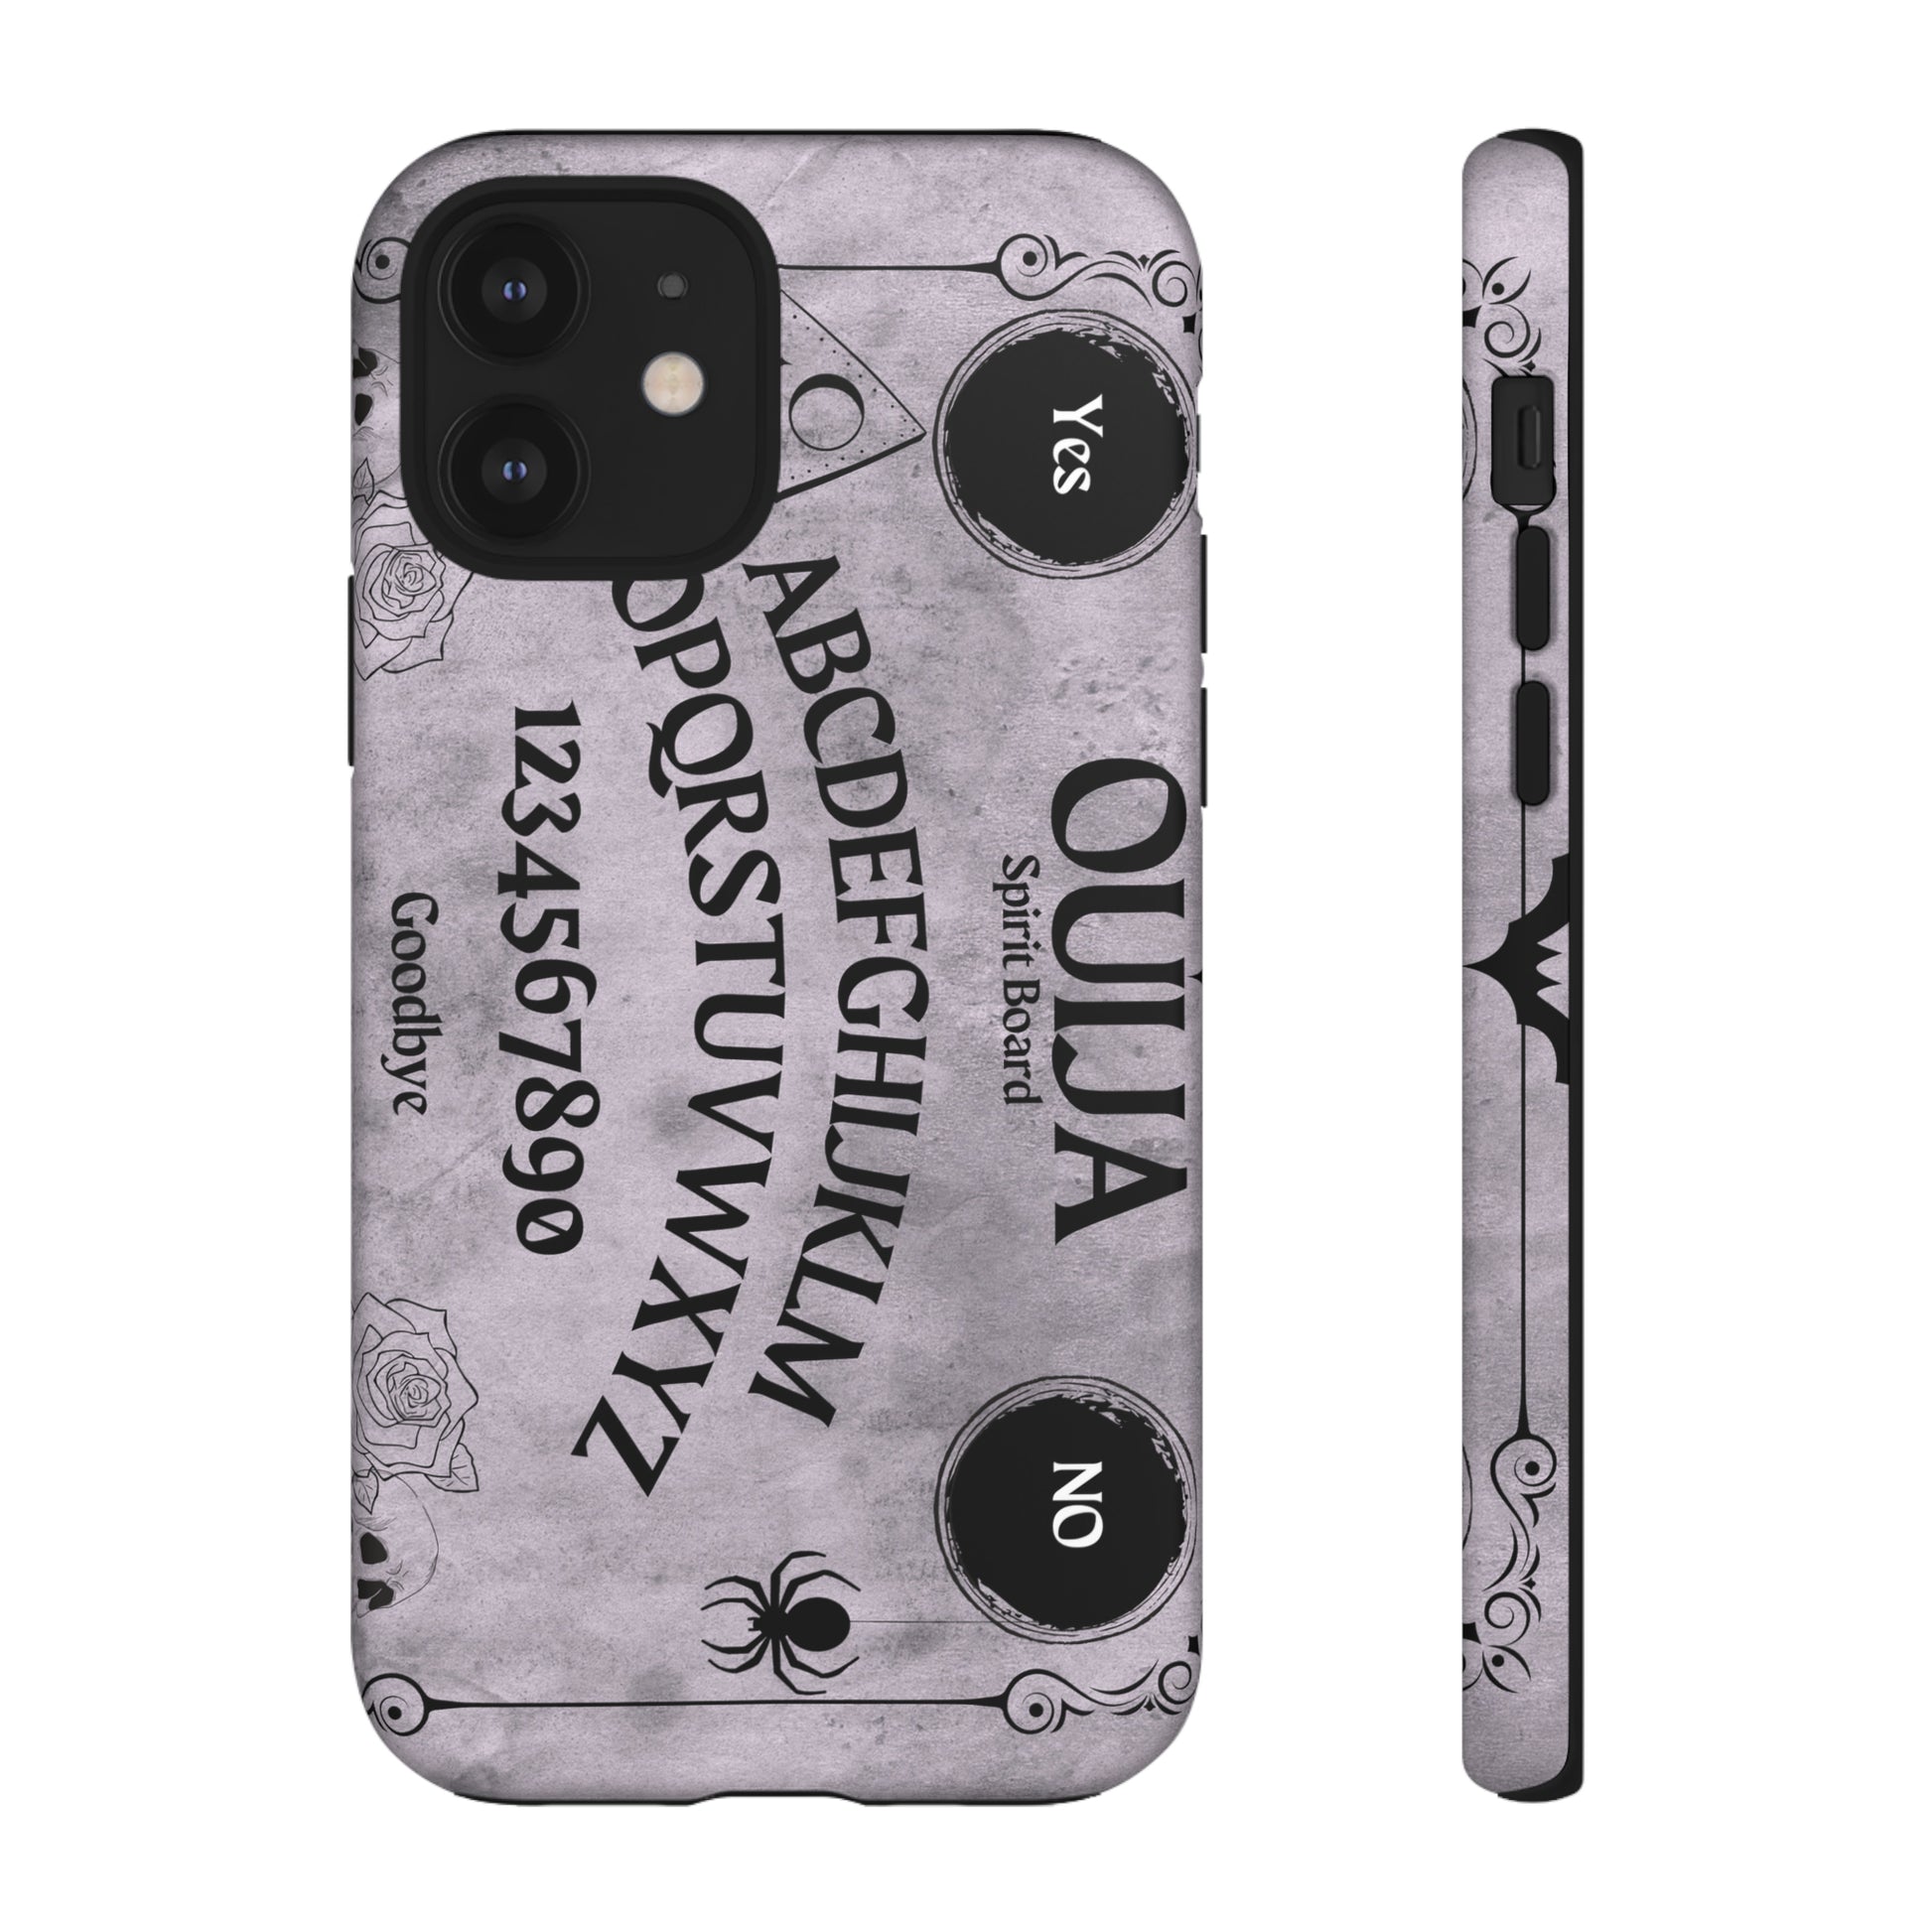 Ouija Board Tough Phone Cases For Samsung iPhone GooglePhone CaseVTZdesignsiPhone 12MatteAccessoriesGlossyhalloween